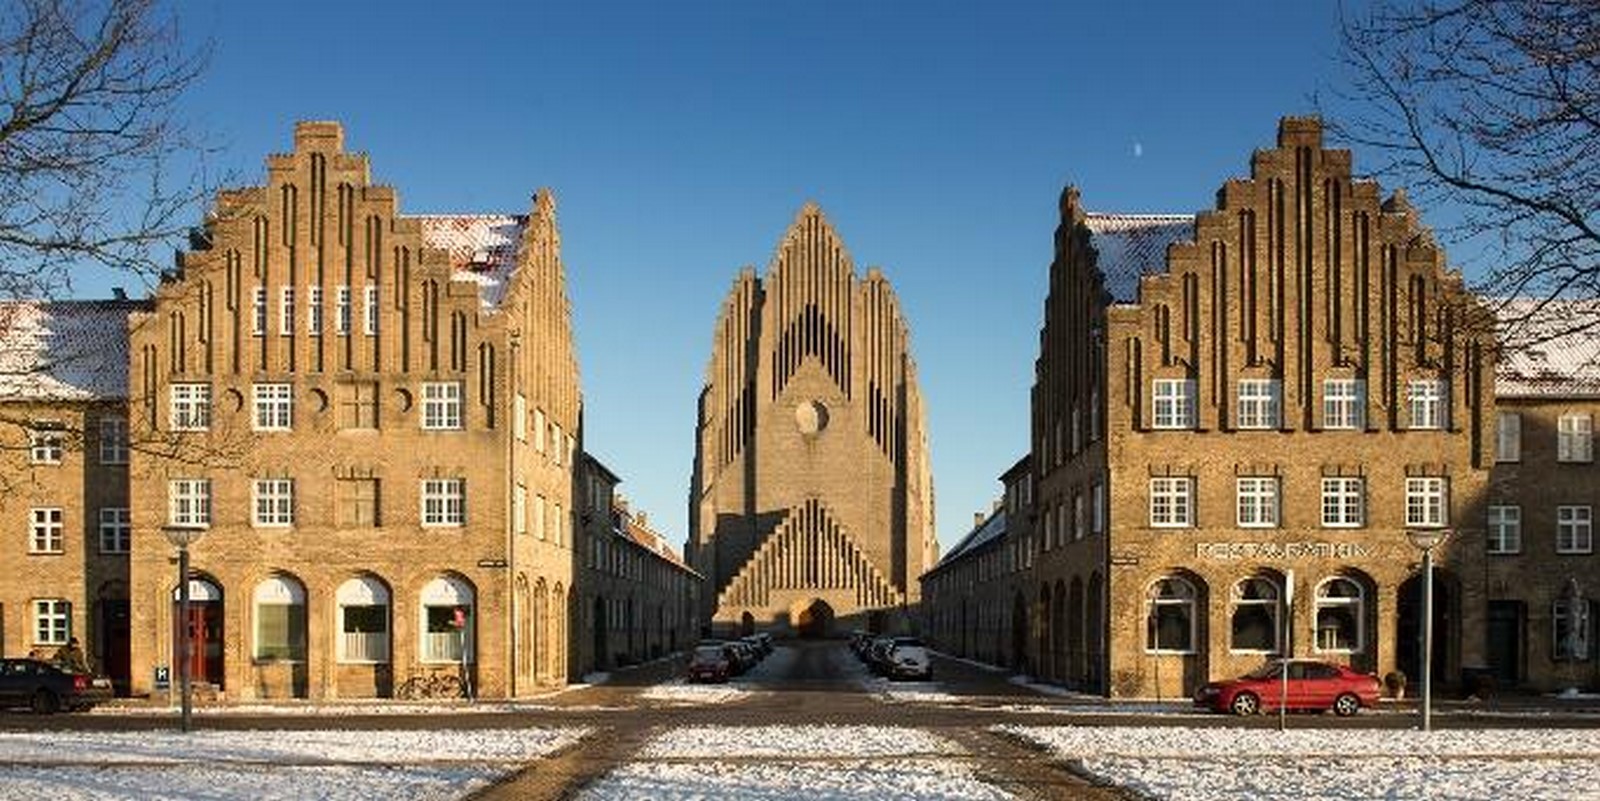 Grundtvig's Church, Denmark - Sheet1